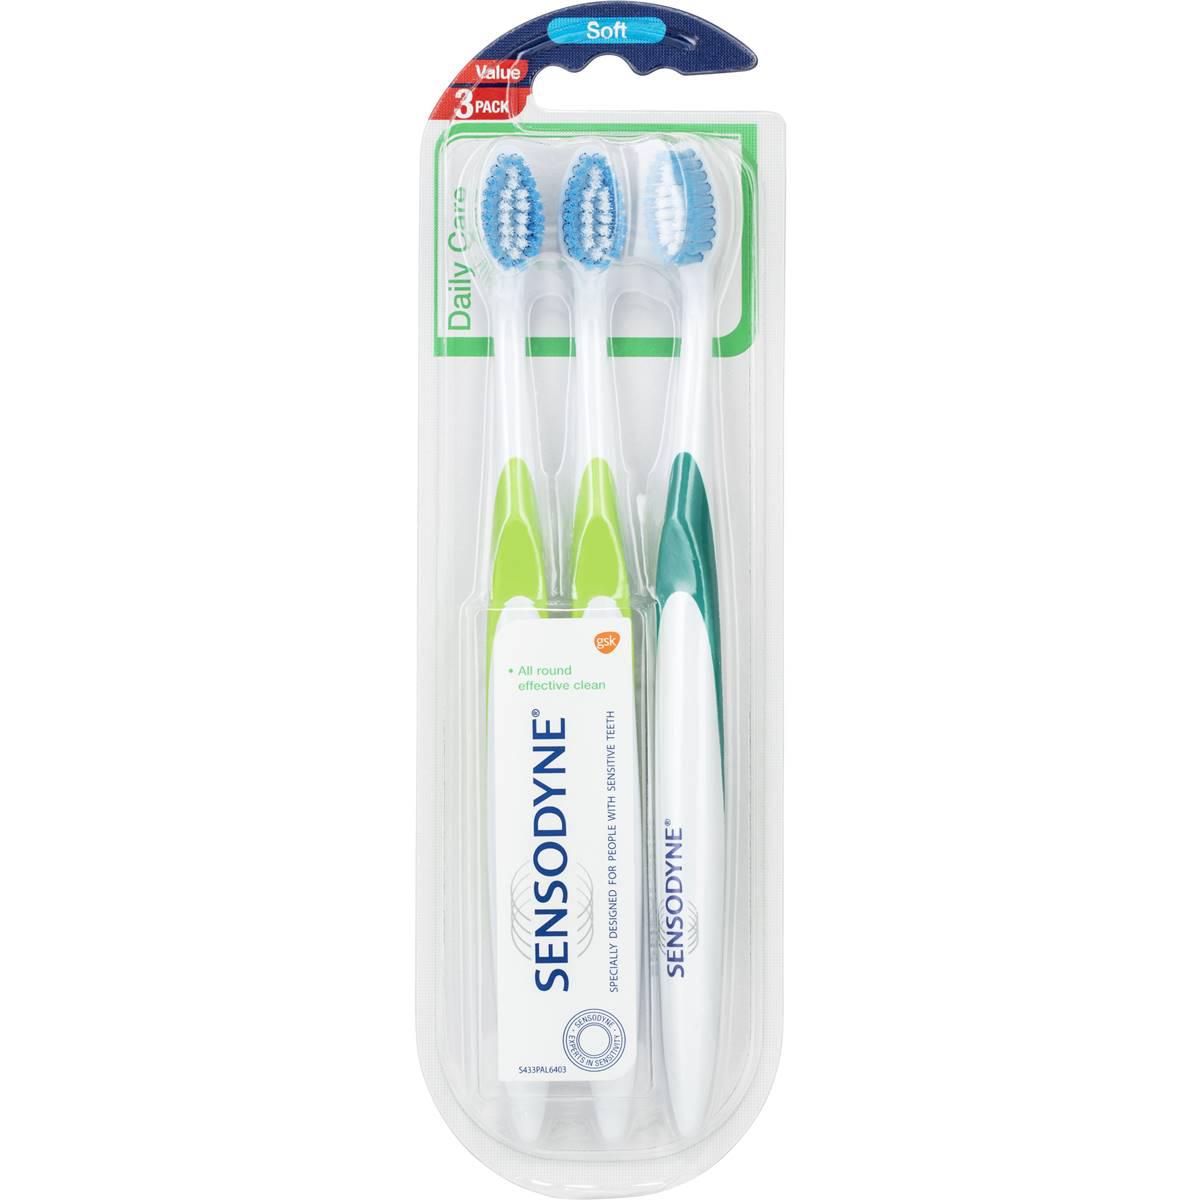 Sensodyne Soft Daily Care Toothbrush 3 Pack